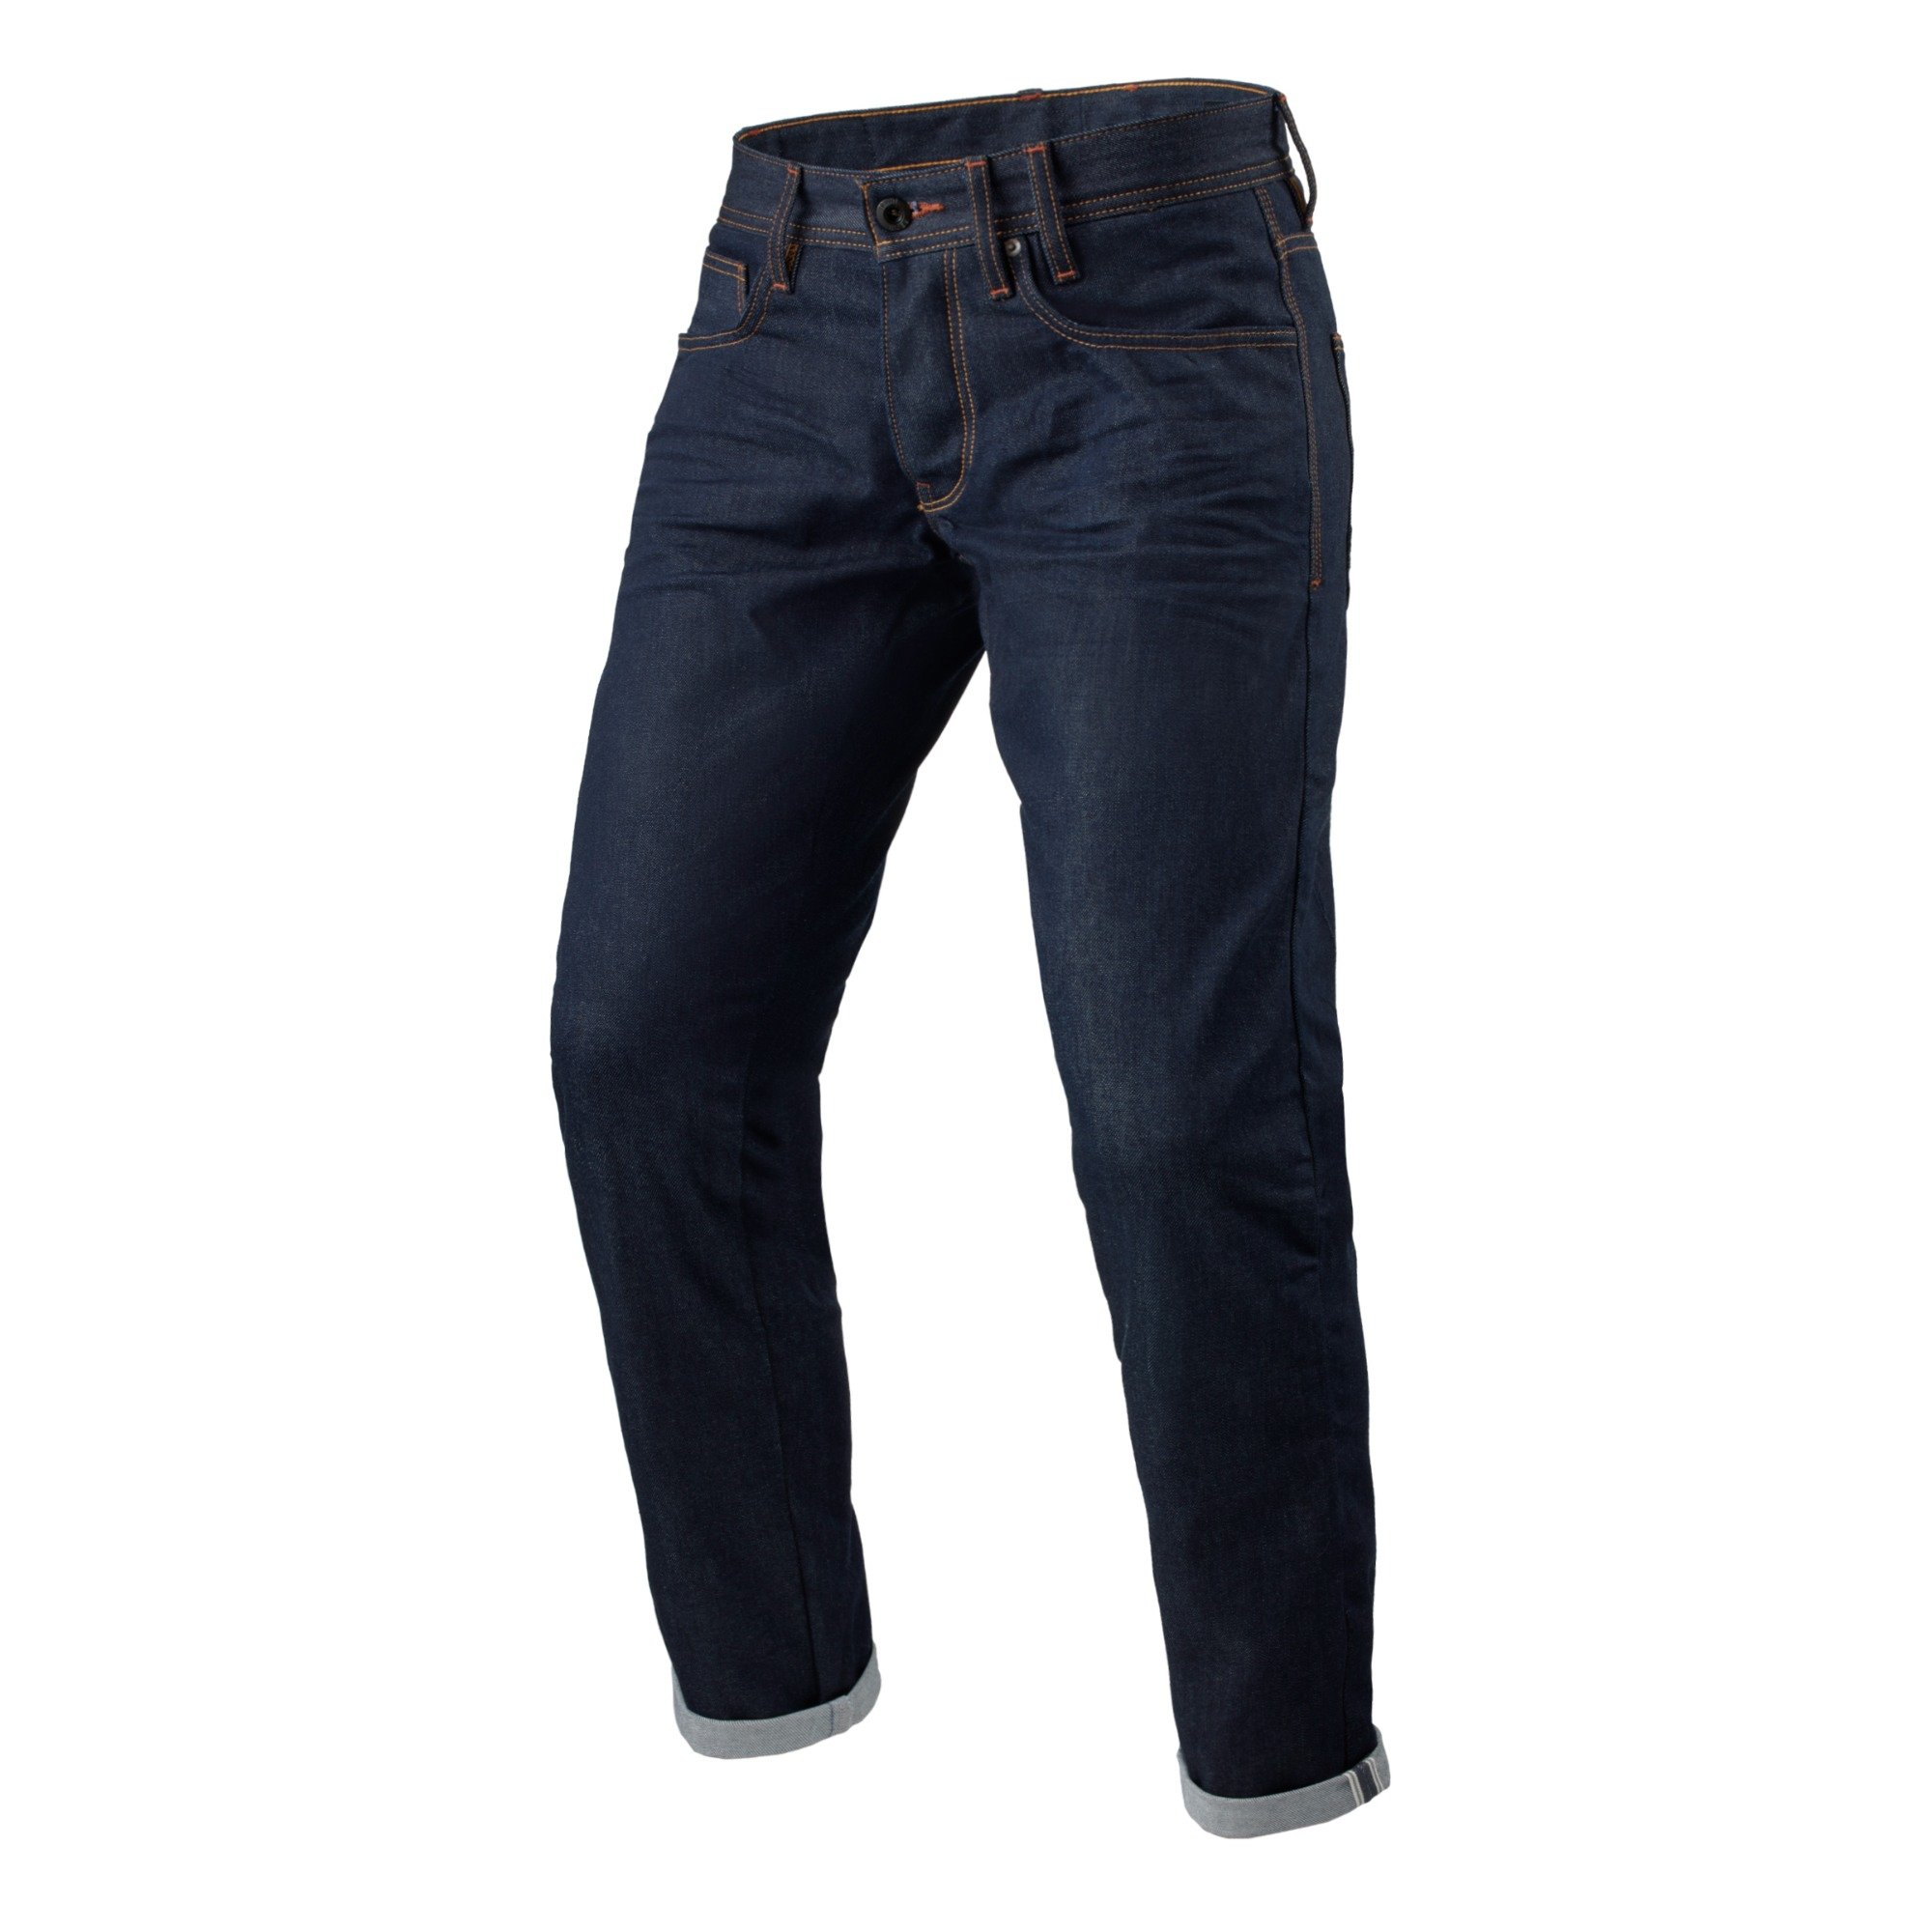 Image of REV'IT! Jeans Lewis Selvedge TF Dark Blue L32 Motorcycle Pants Size L32/W31 EN